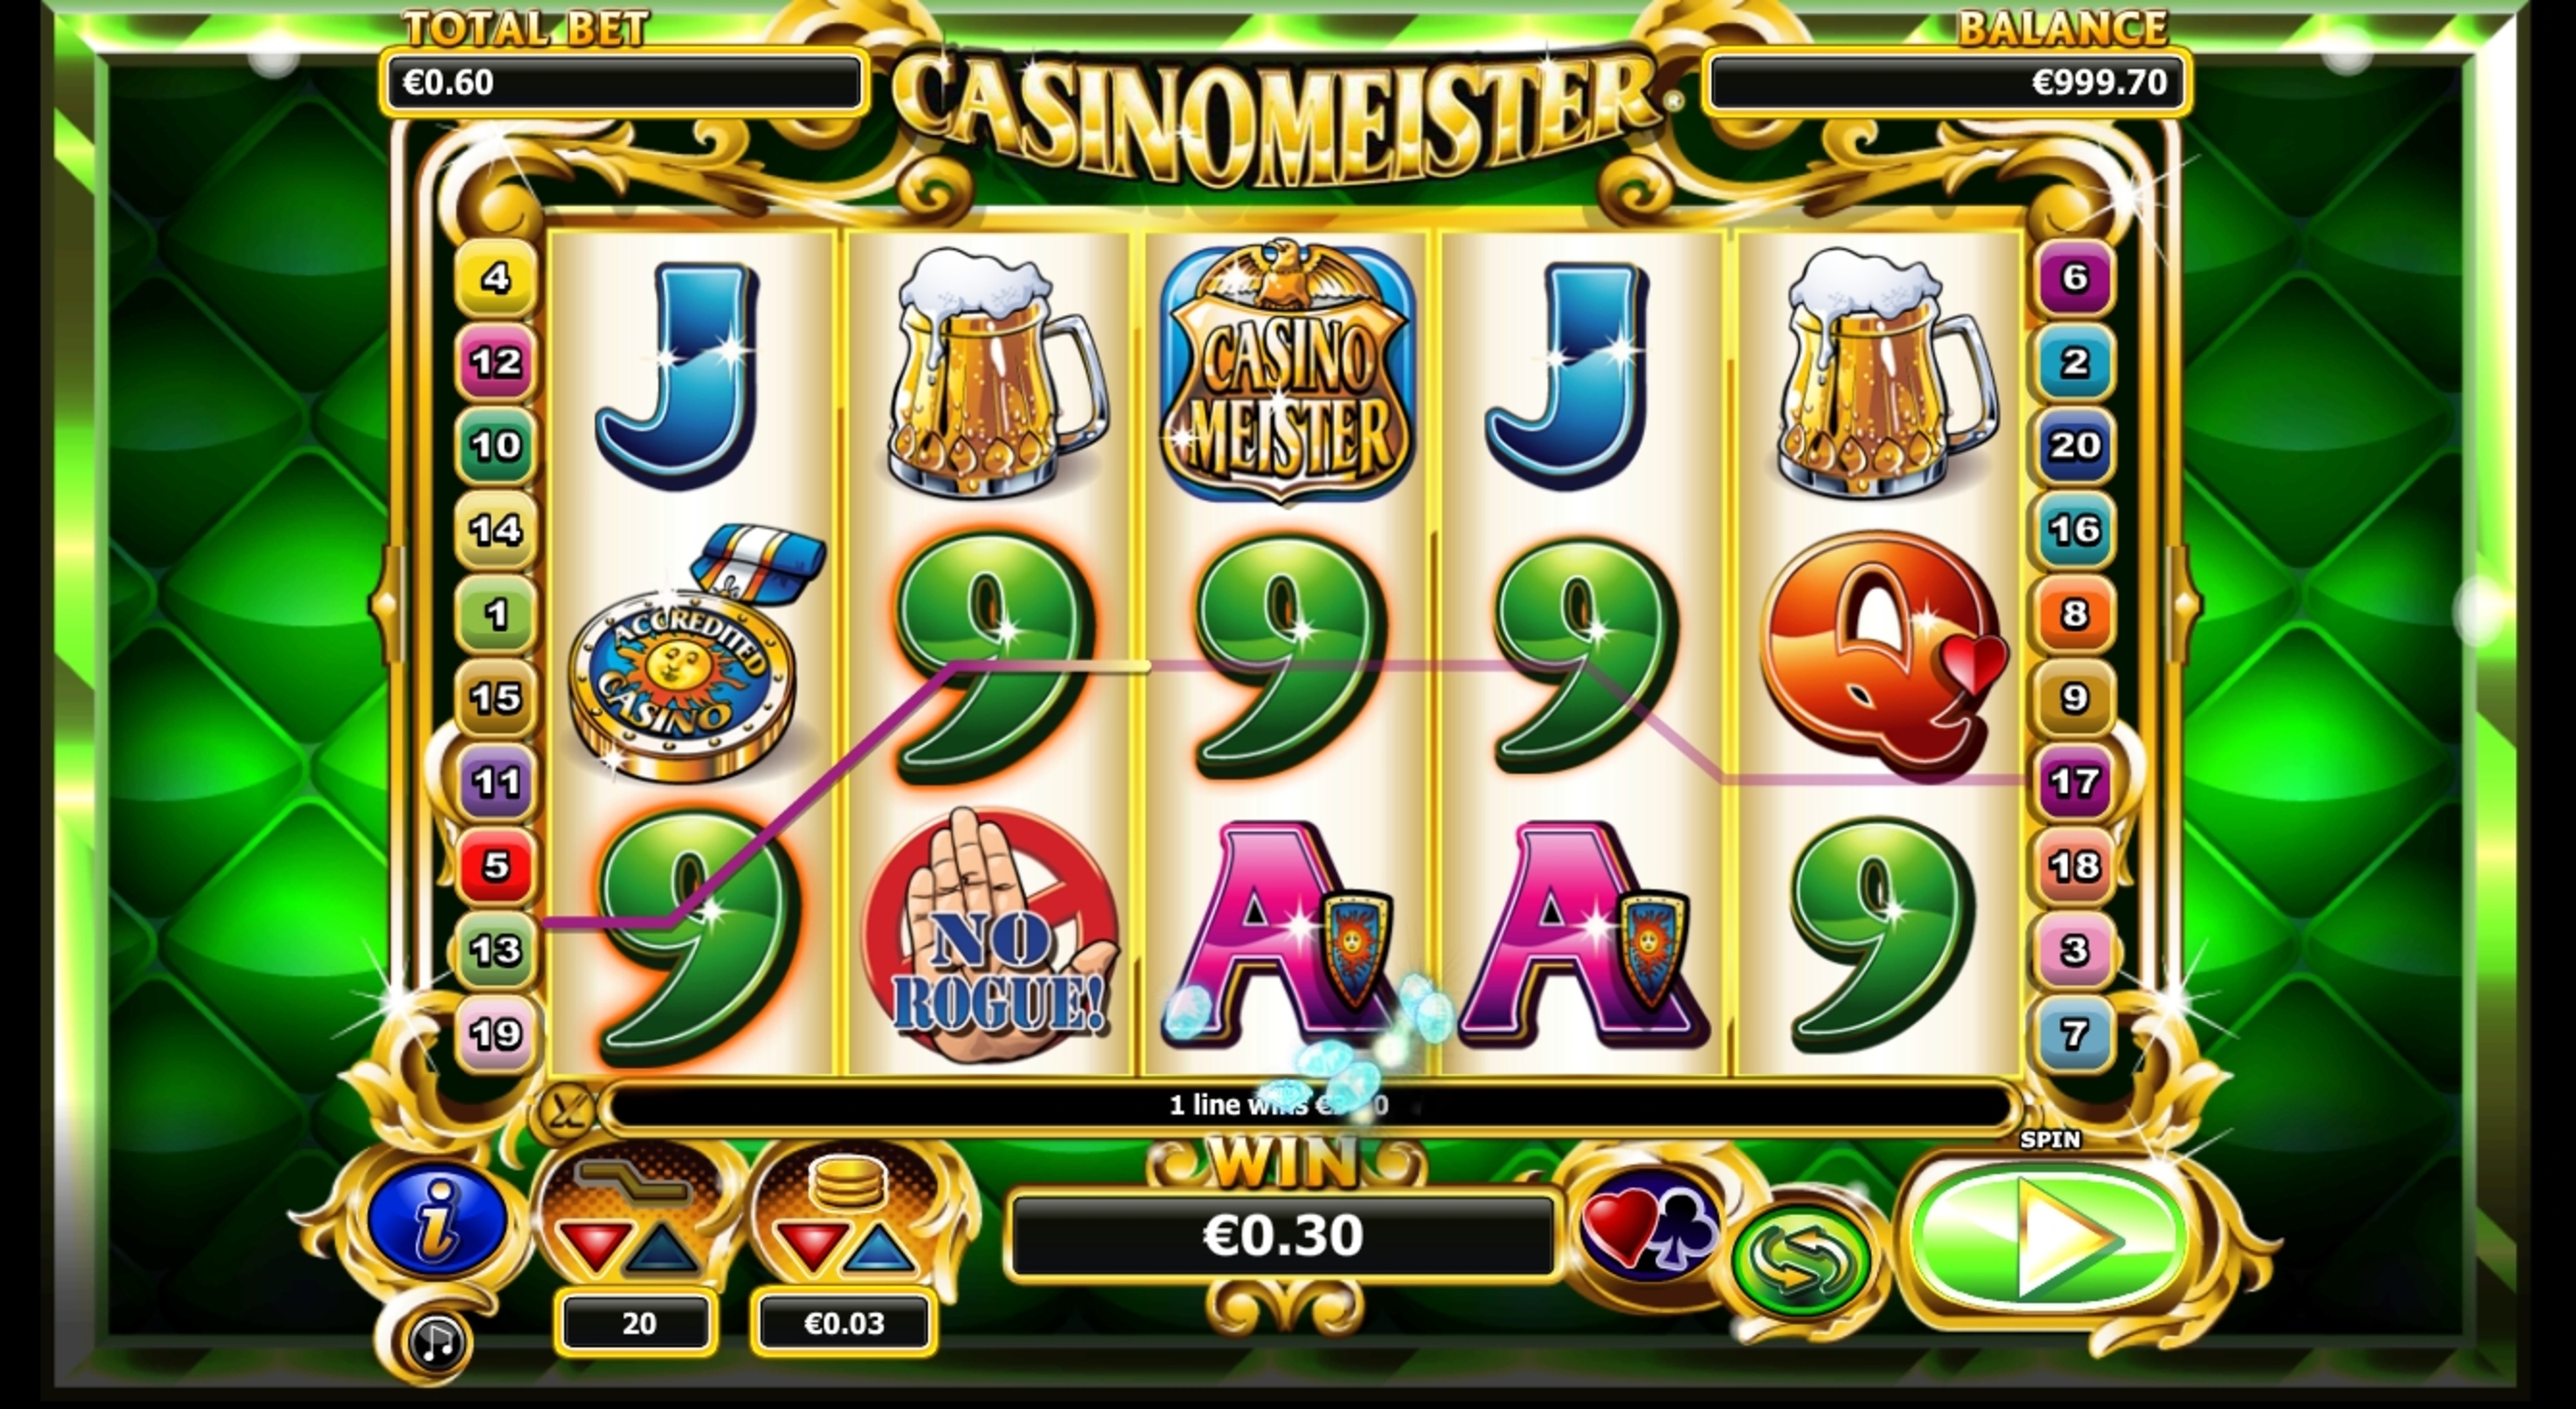 Win Money in Casinomeister Free Slot Game by NextGen Gaming